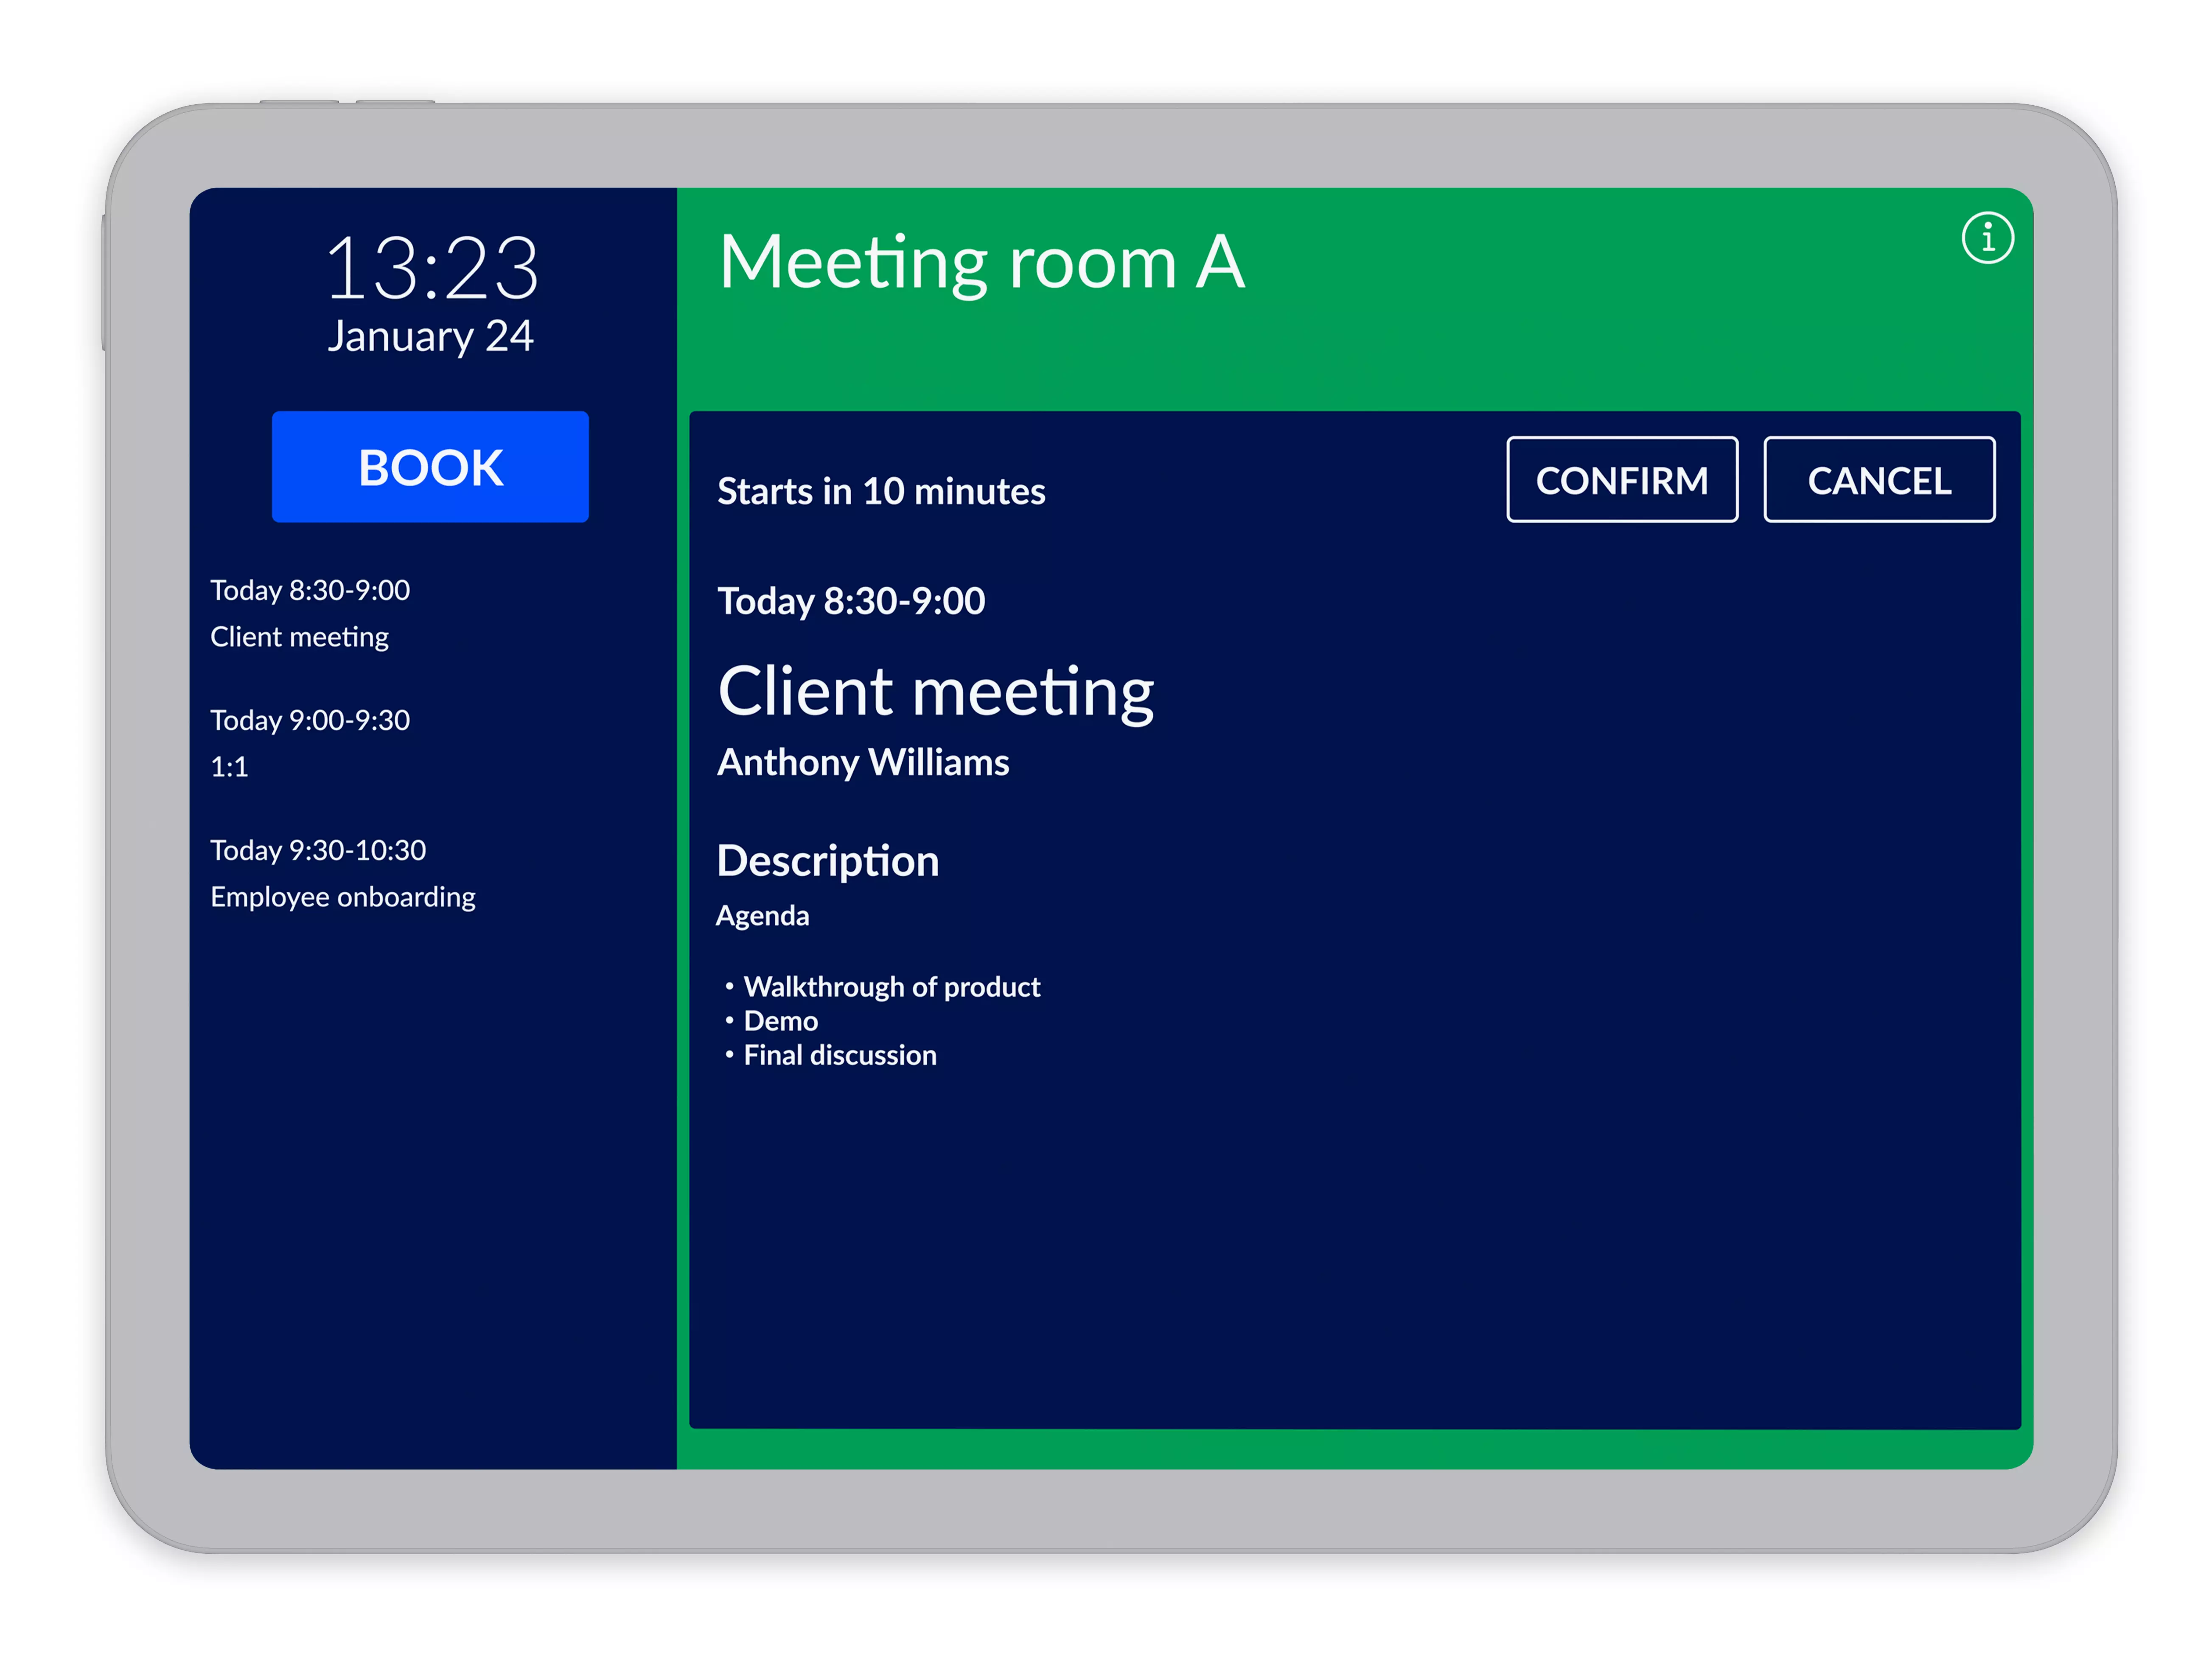 AskCody Meeting Room Displays showing daily activities